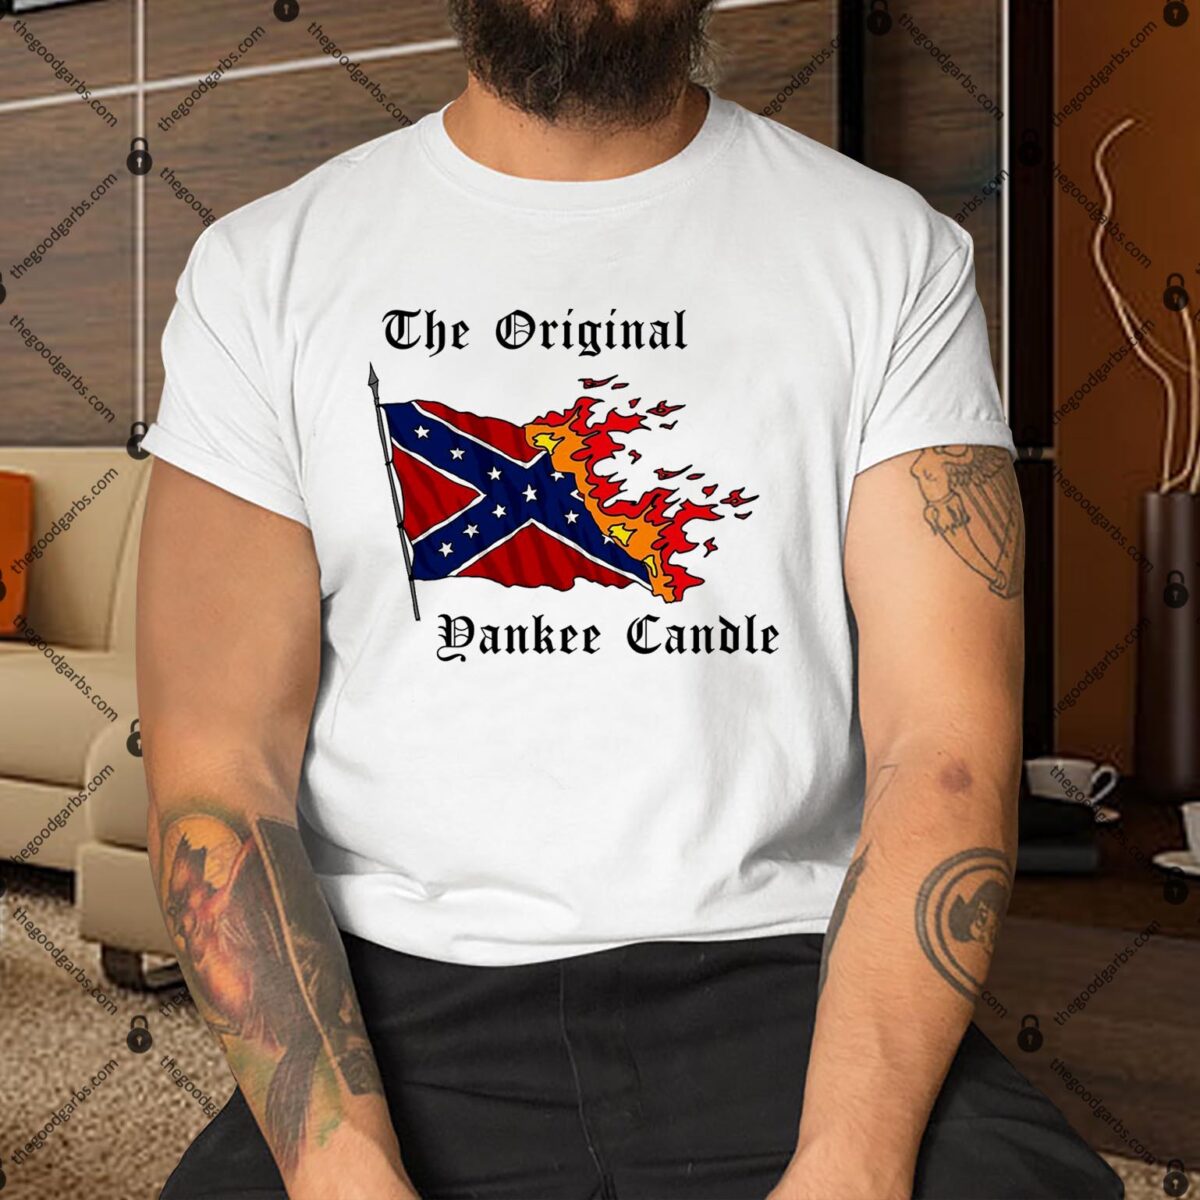 The Original Yankee Candle Shirt